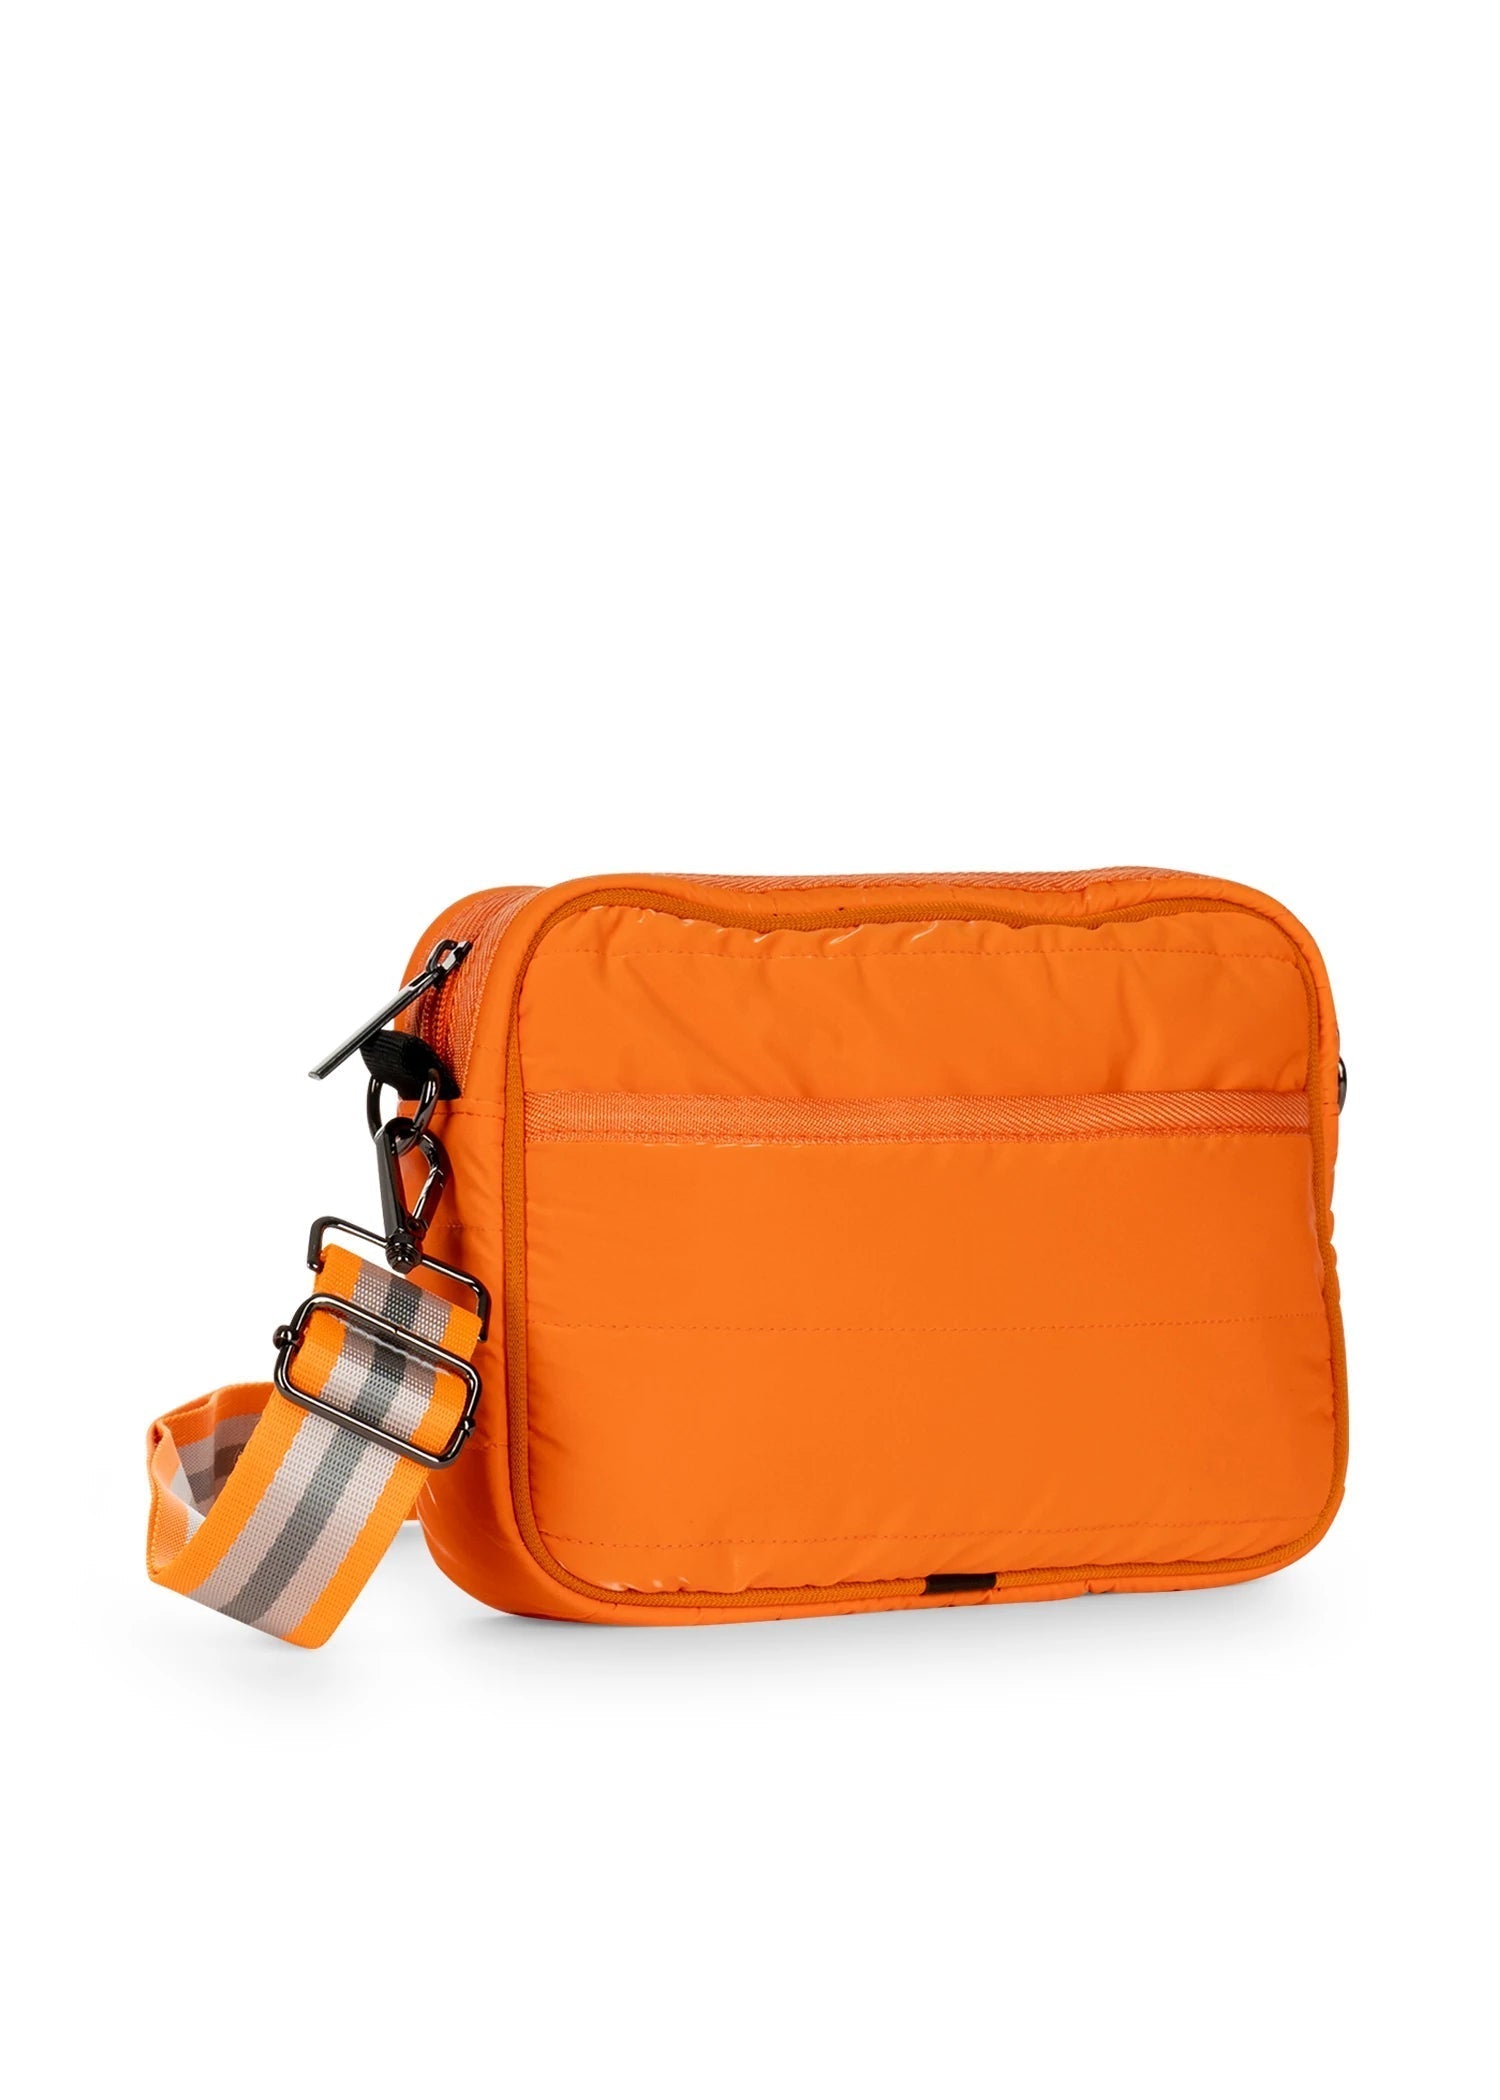 Small shoulder bag - Orange - Ladies | H&M IN